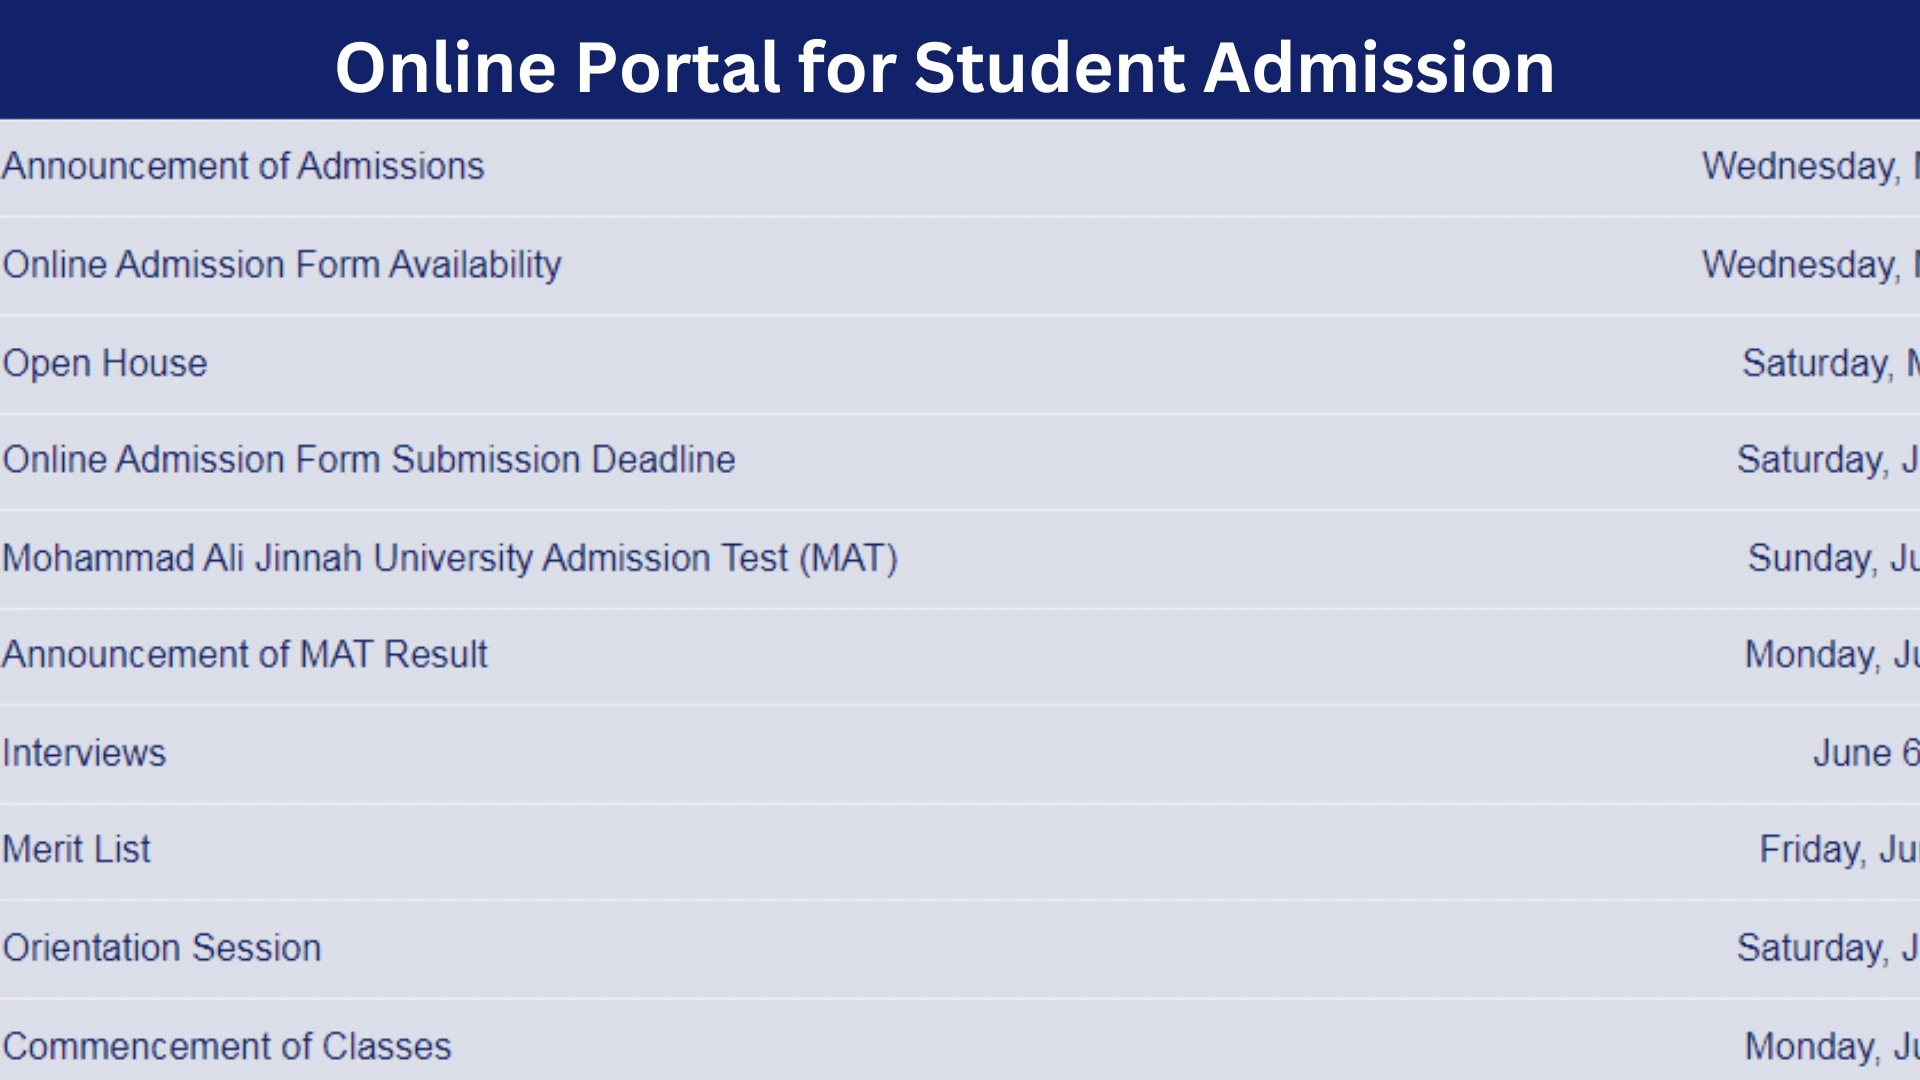 Online Portal for Student Admission